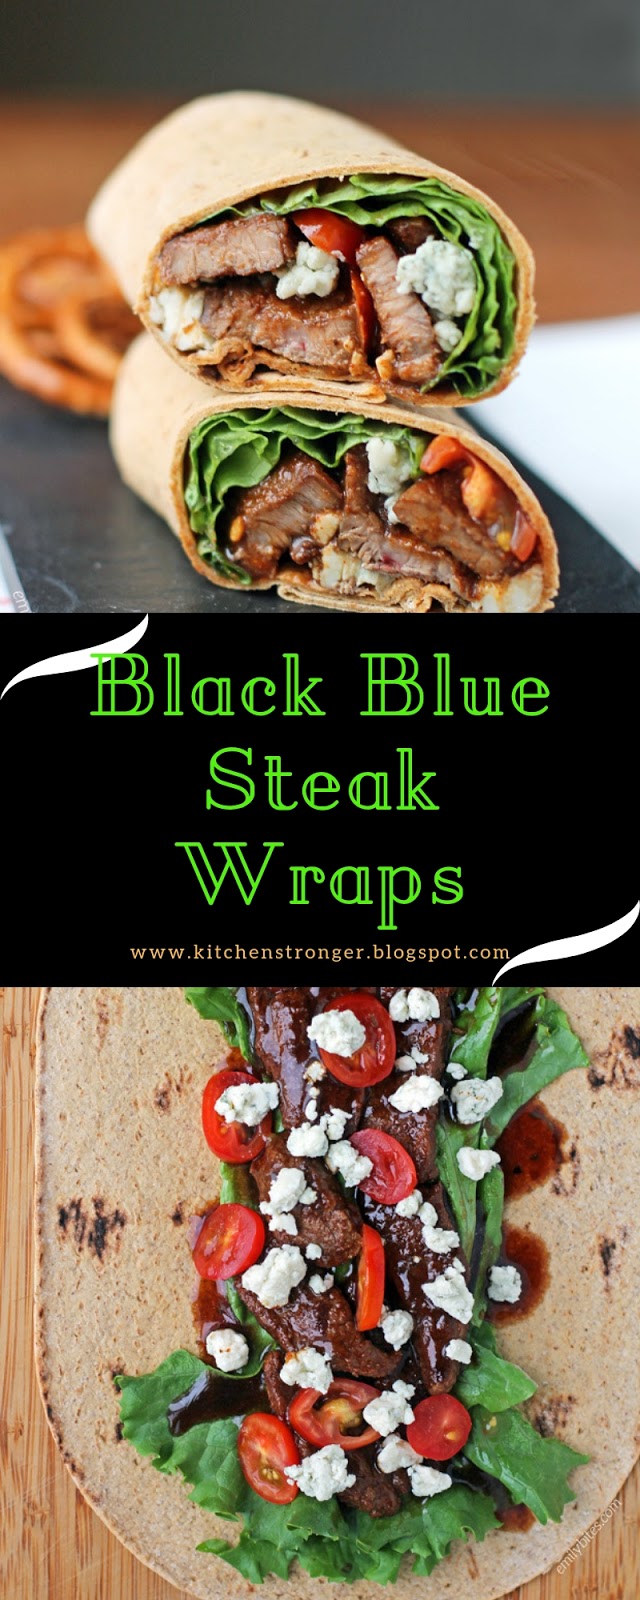 Black Blue Steak Wraps